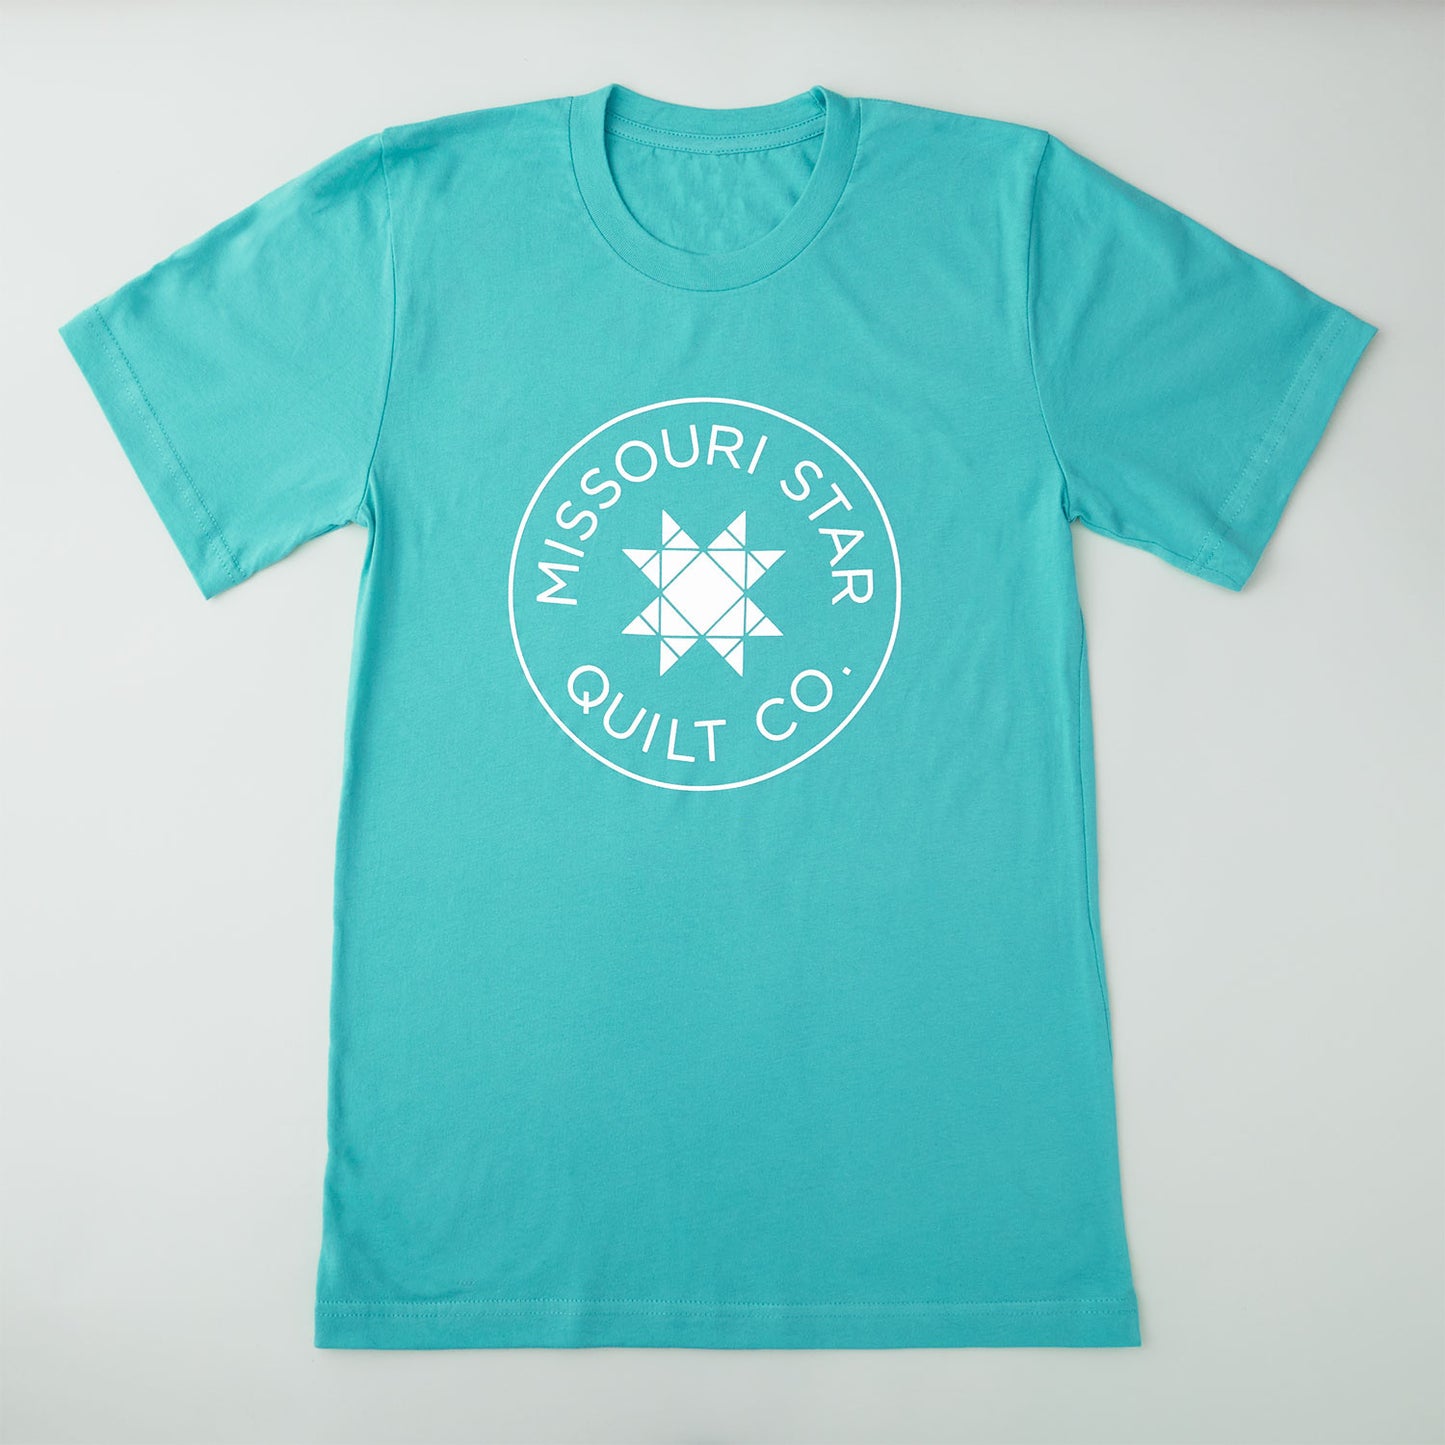 Missouri Star Teal Circle Logo T-shirt - M Primary Image